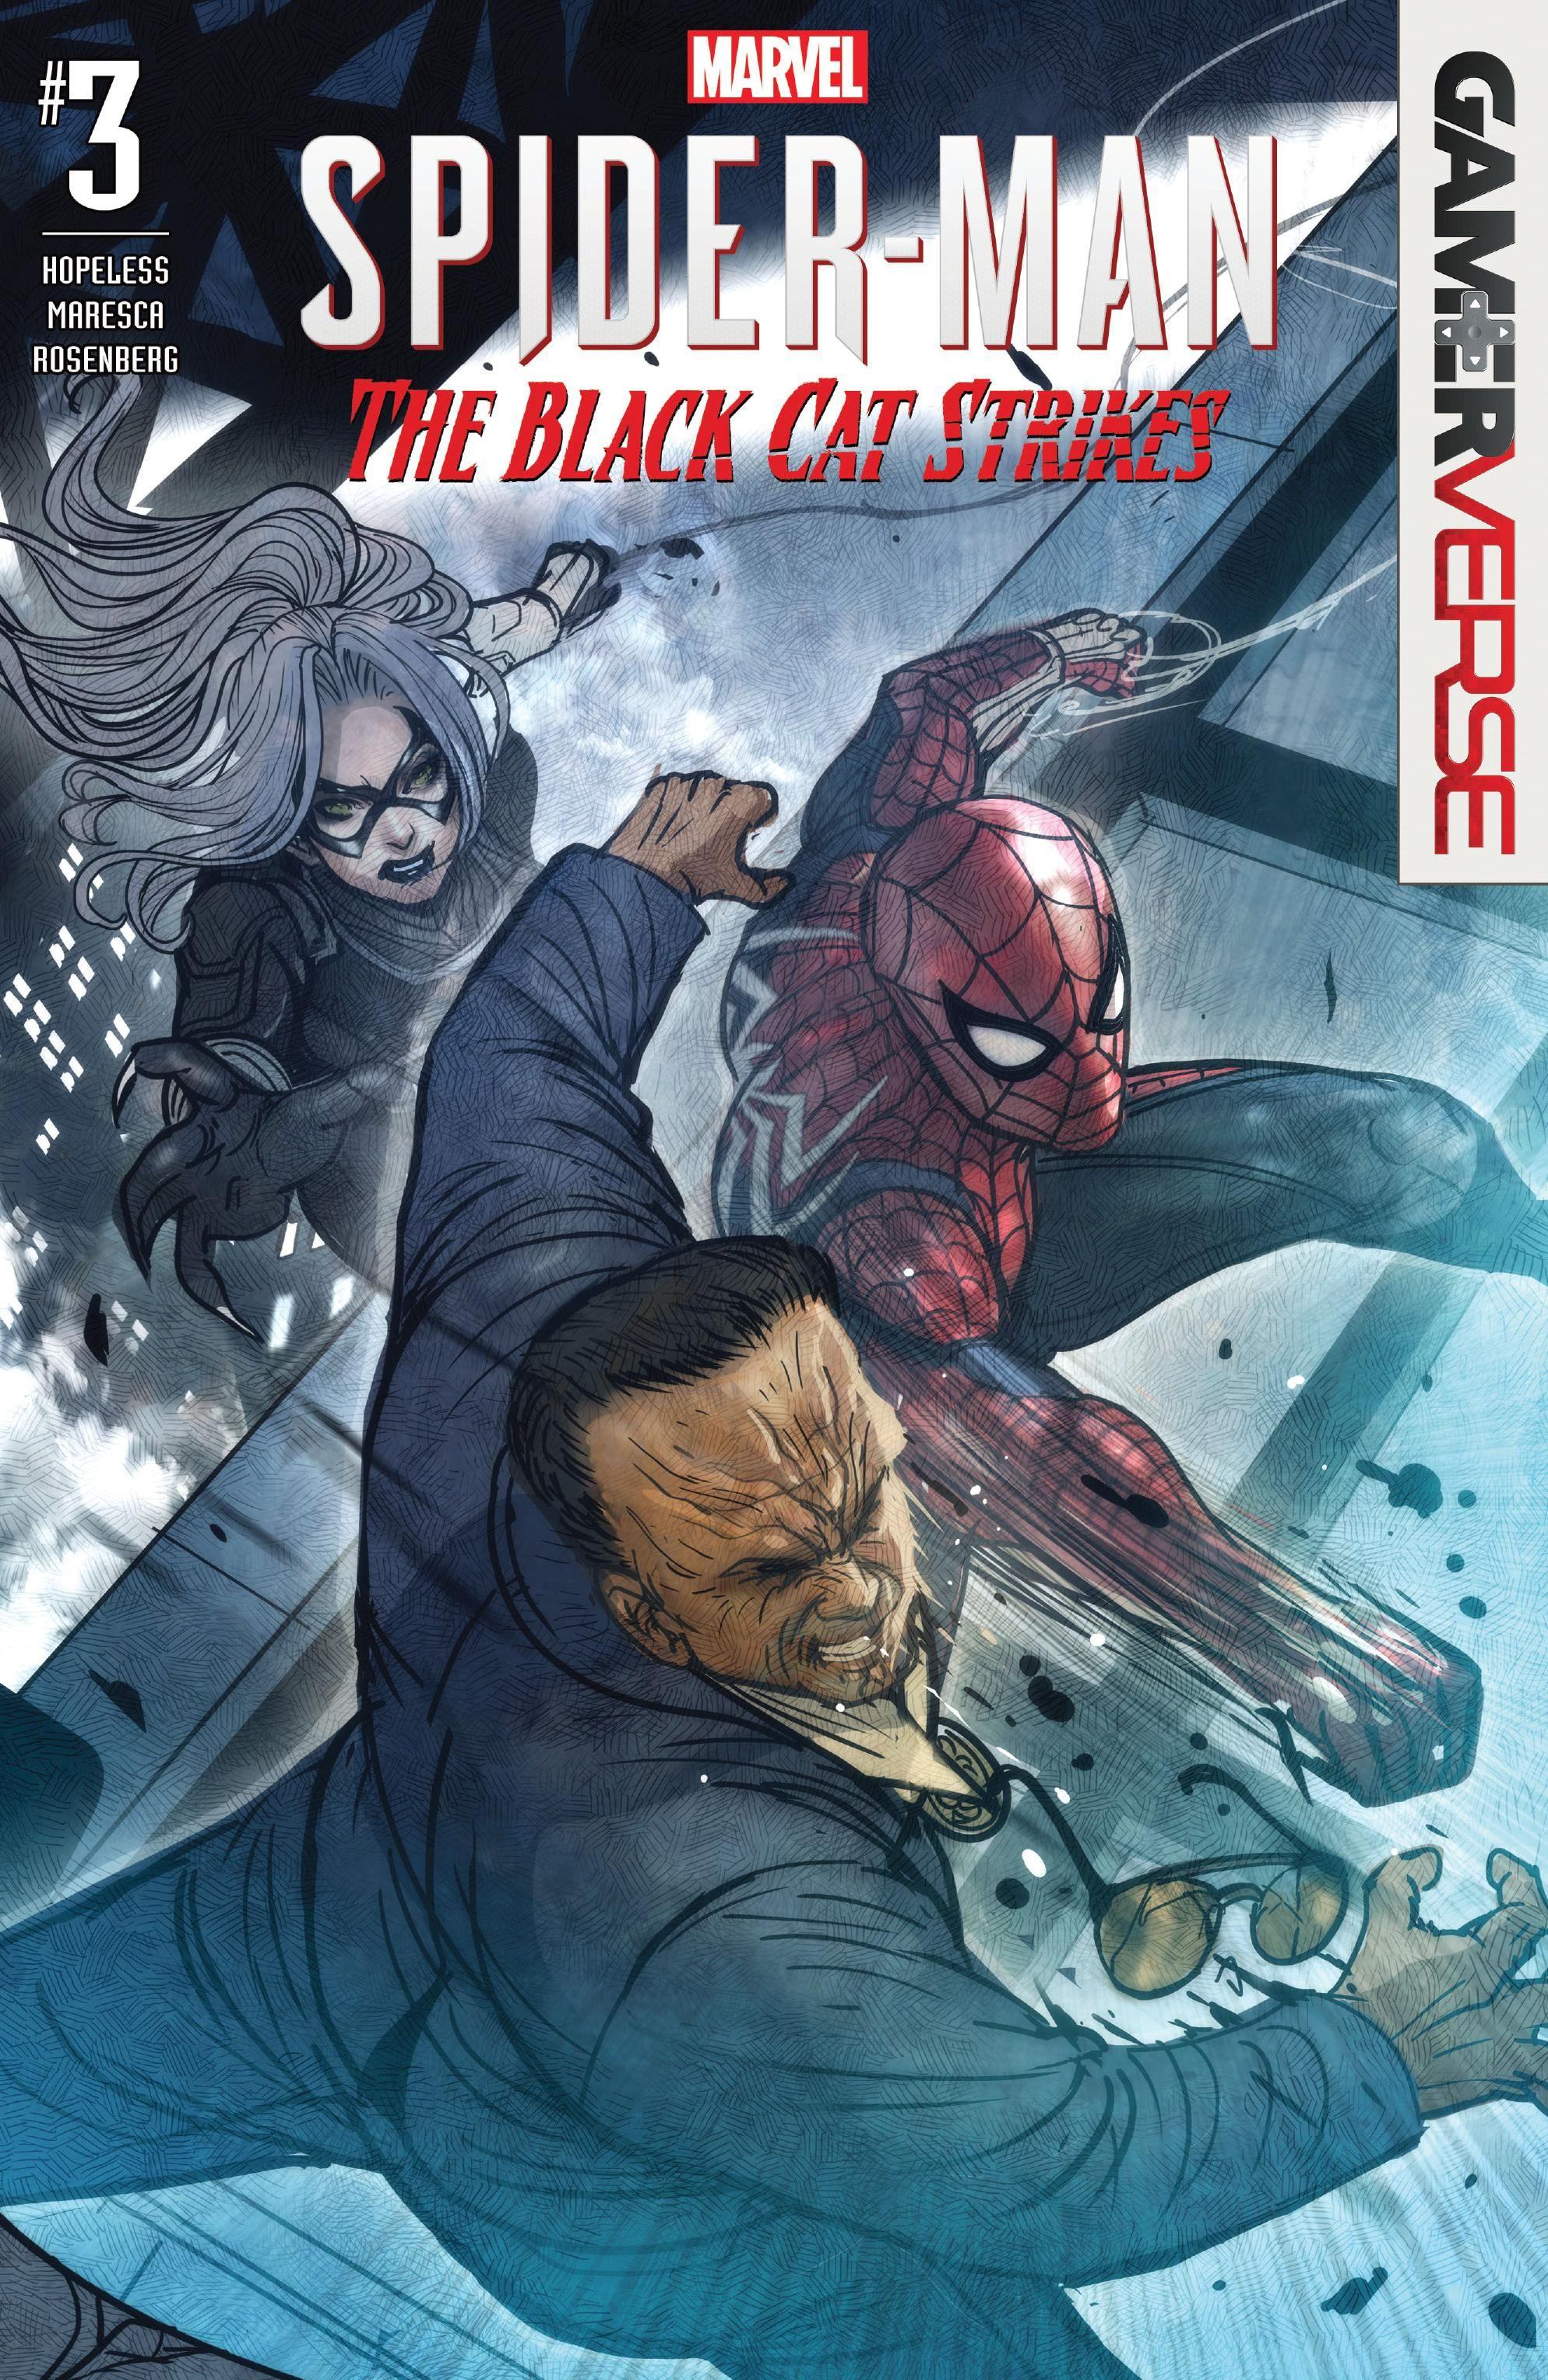 Marvel's Spider-Man: The Black Cat Strikes Vol. 1 #3